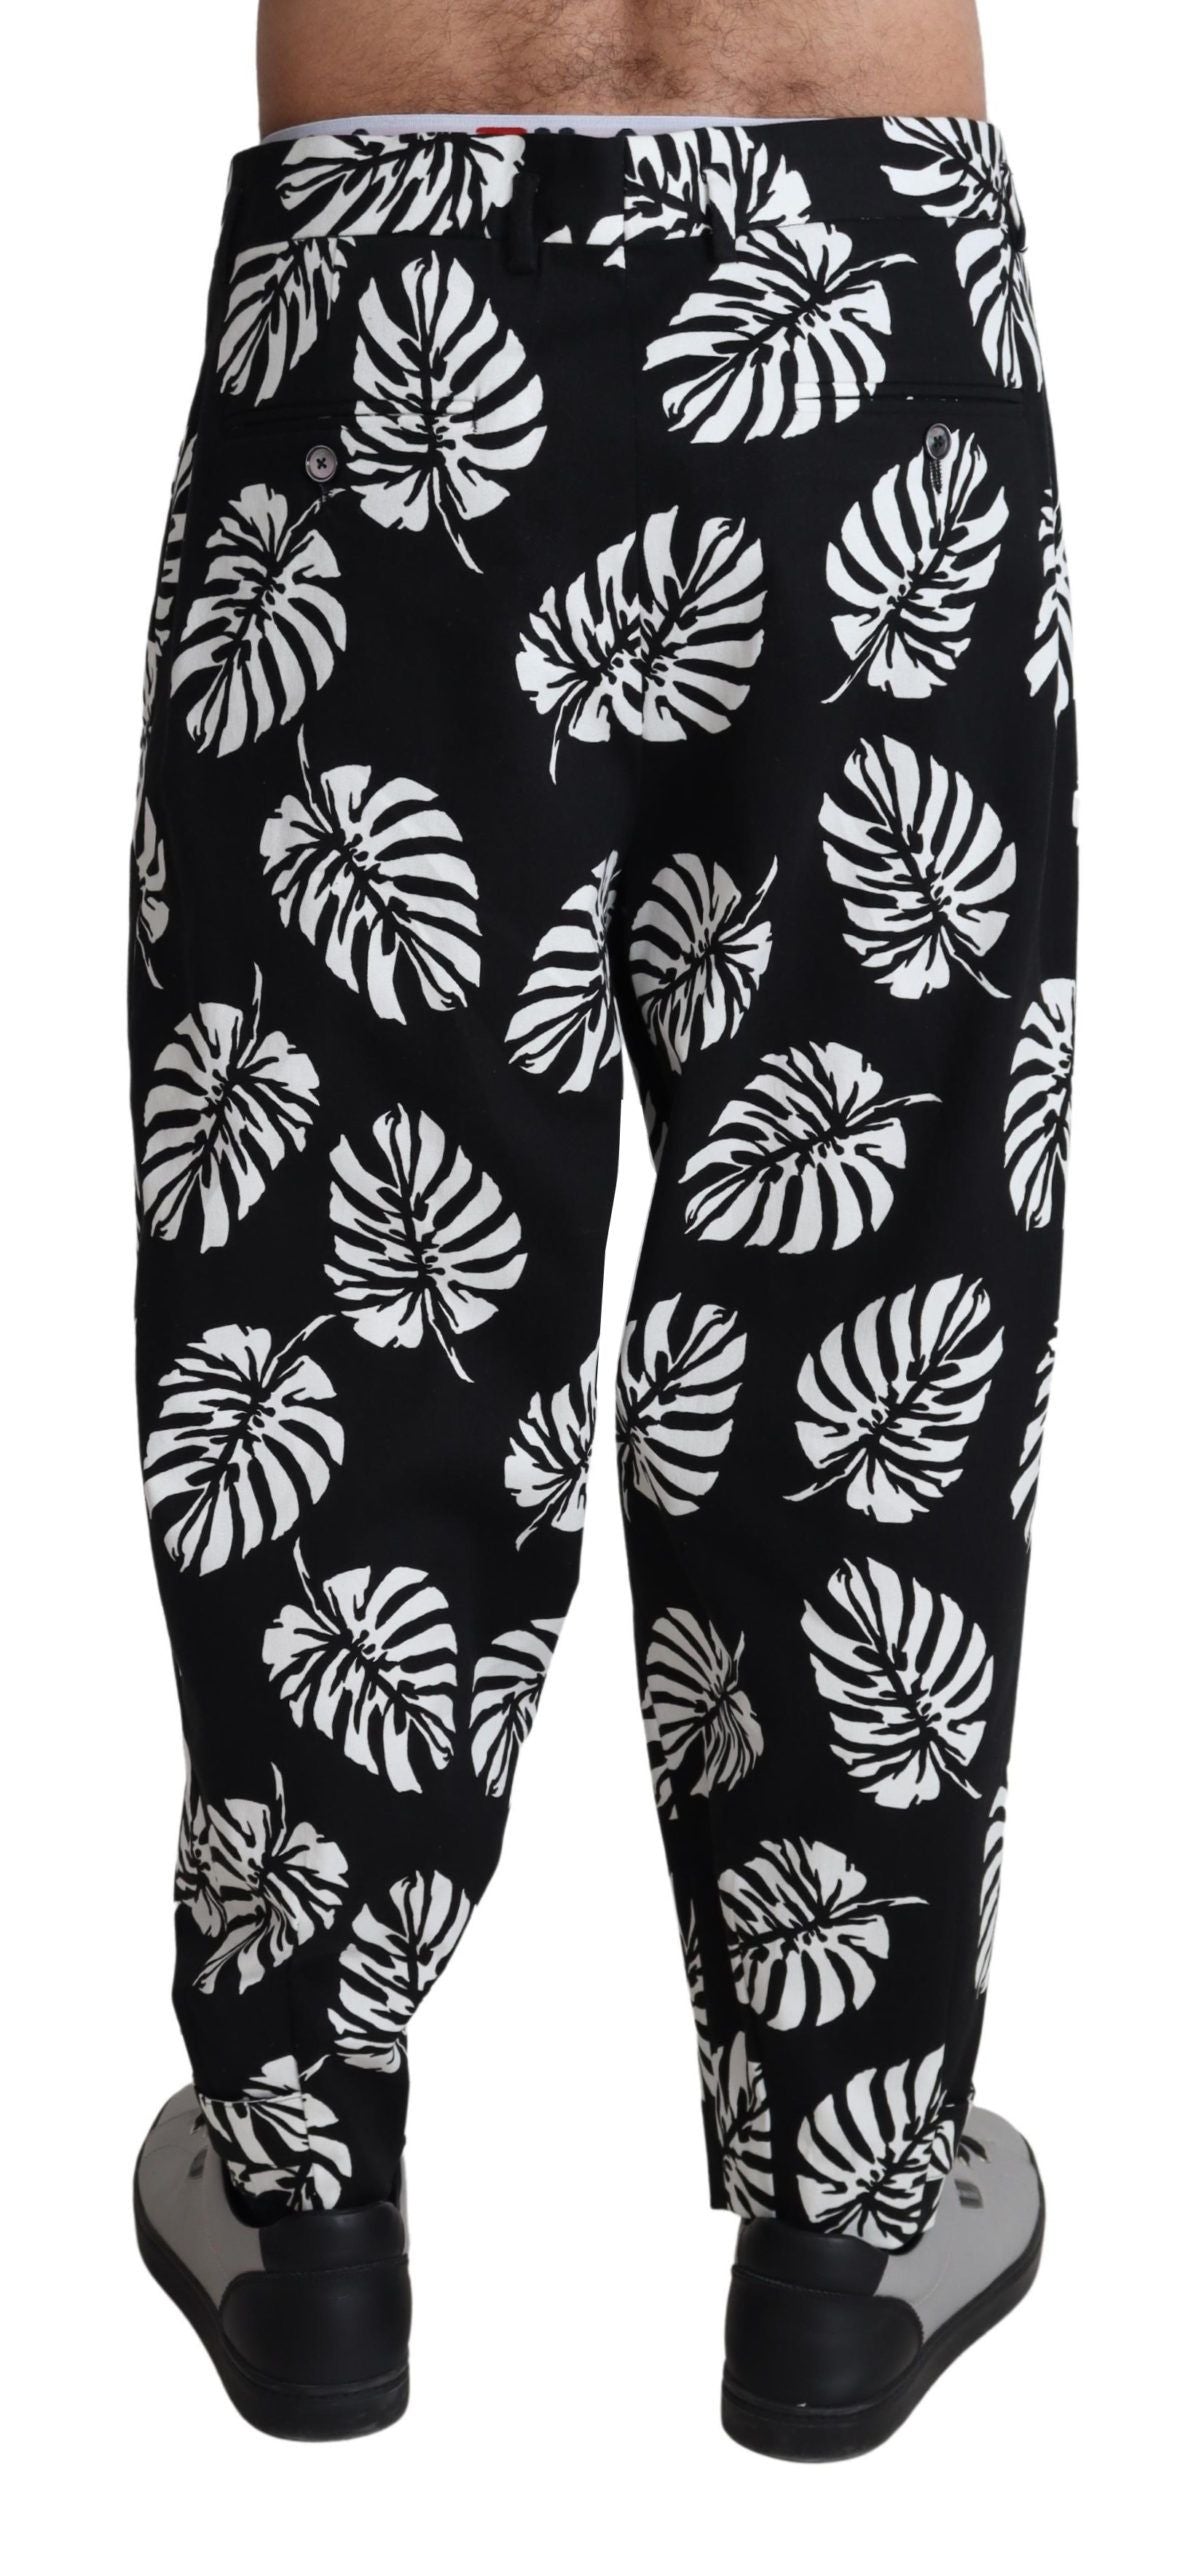 Dolce & Gabbana Black Leaf Cotton Stretch Trouser Pants Pants